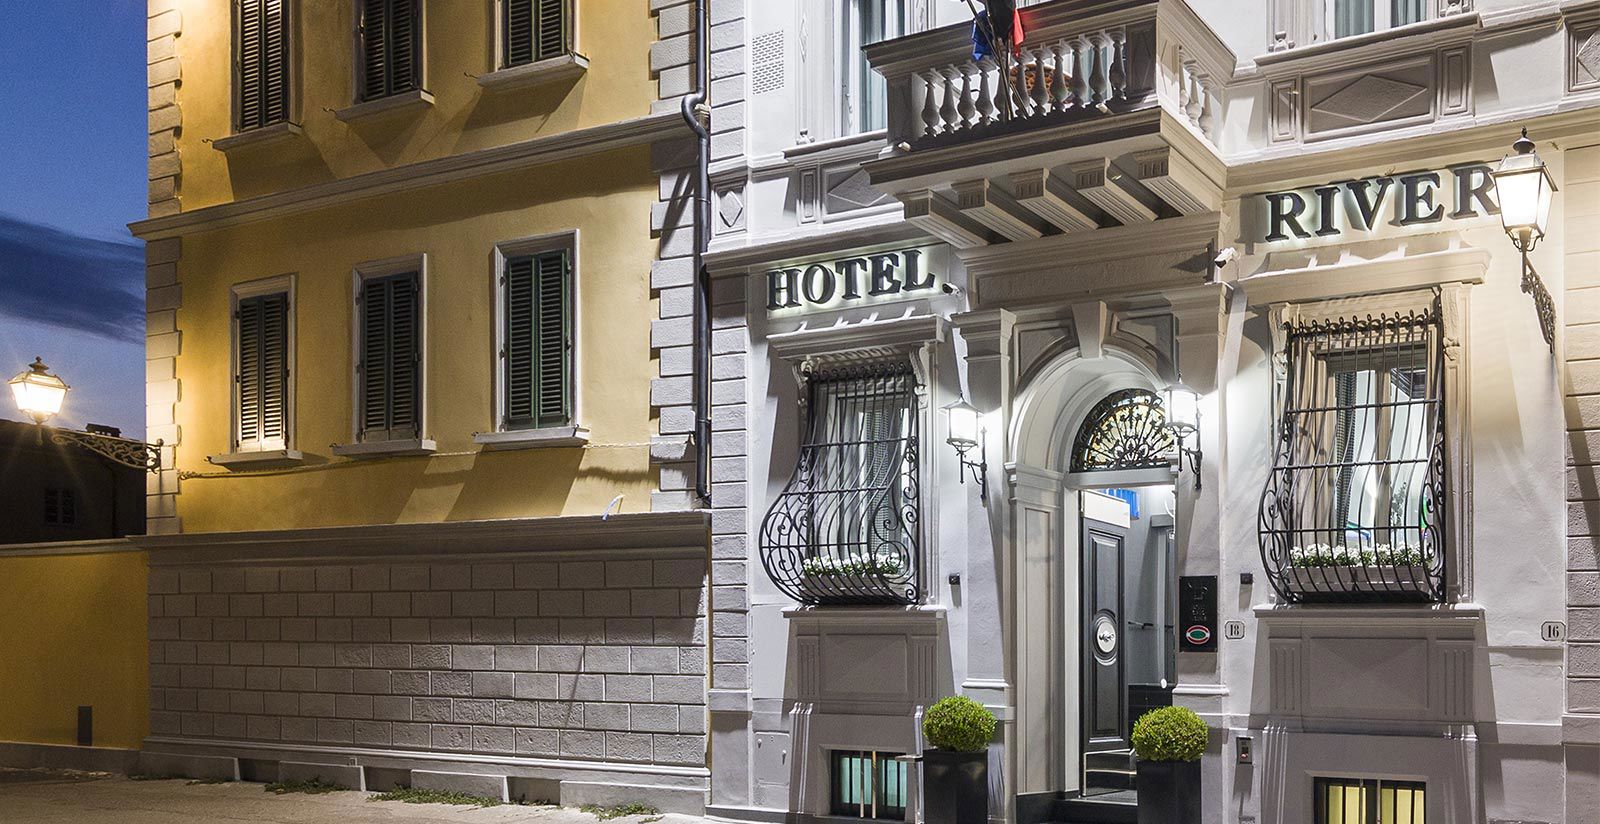 Hotel River & Spa Firenze - Contatti 3